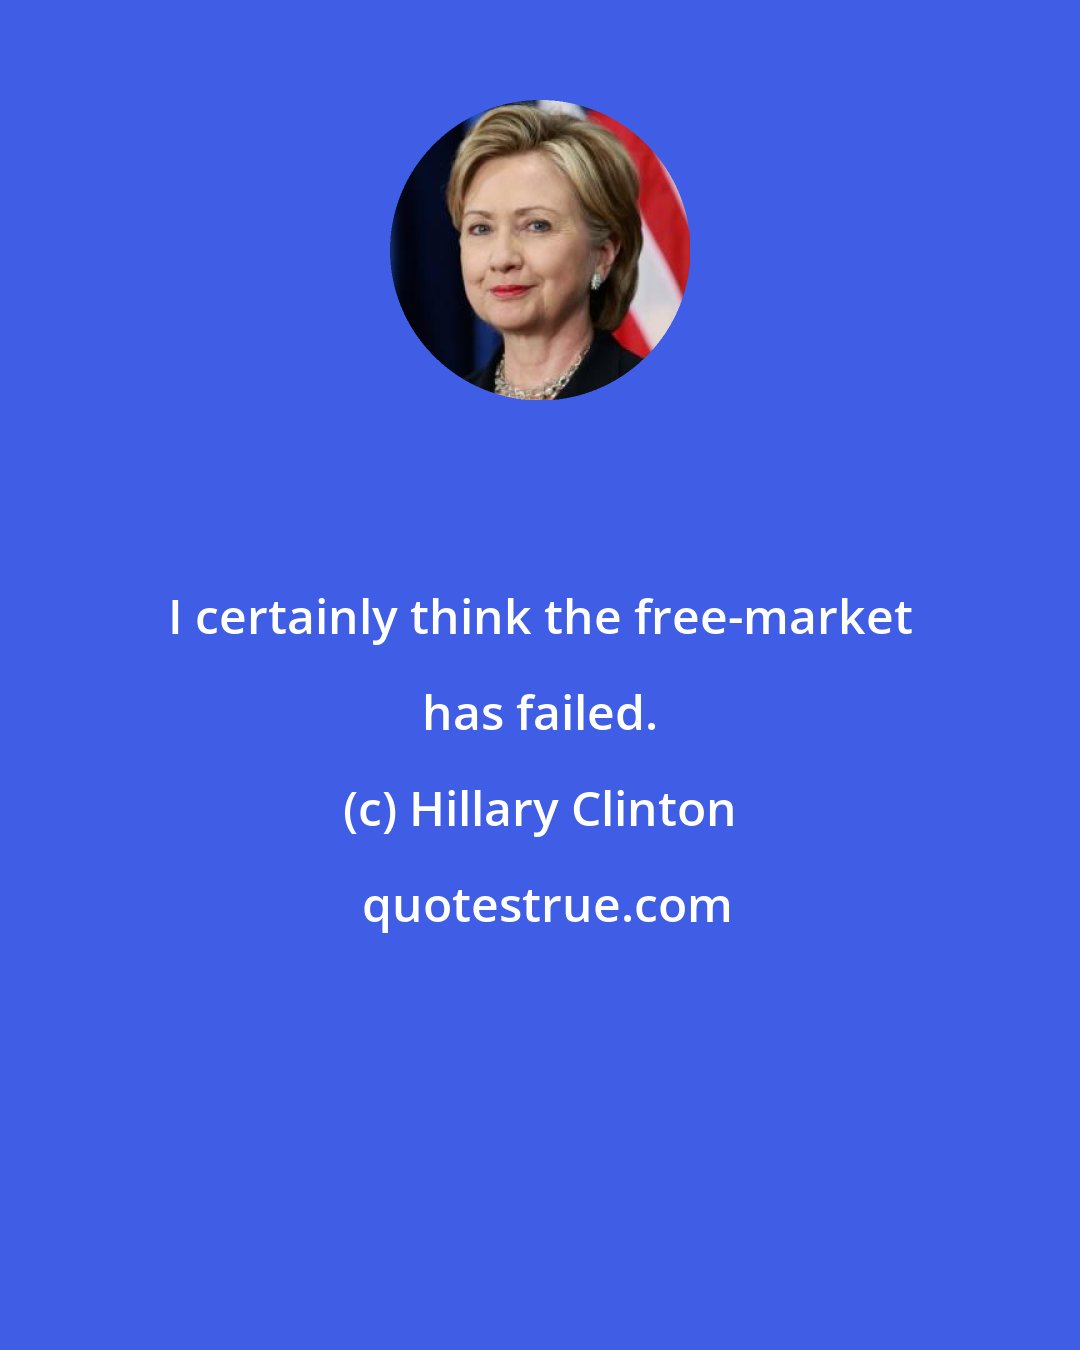 Hillary Clinton: I certainly think the free-market has failed.